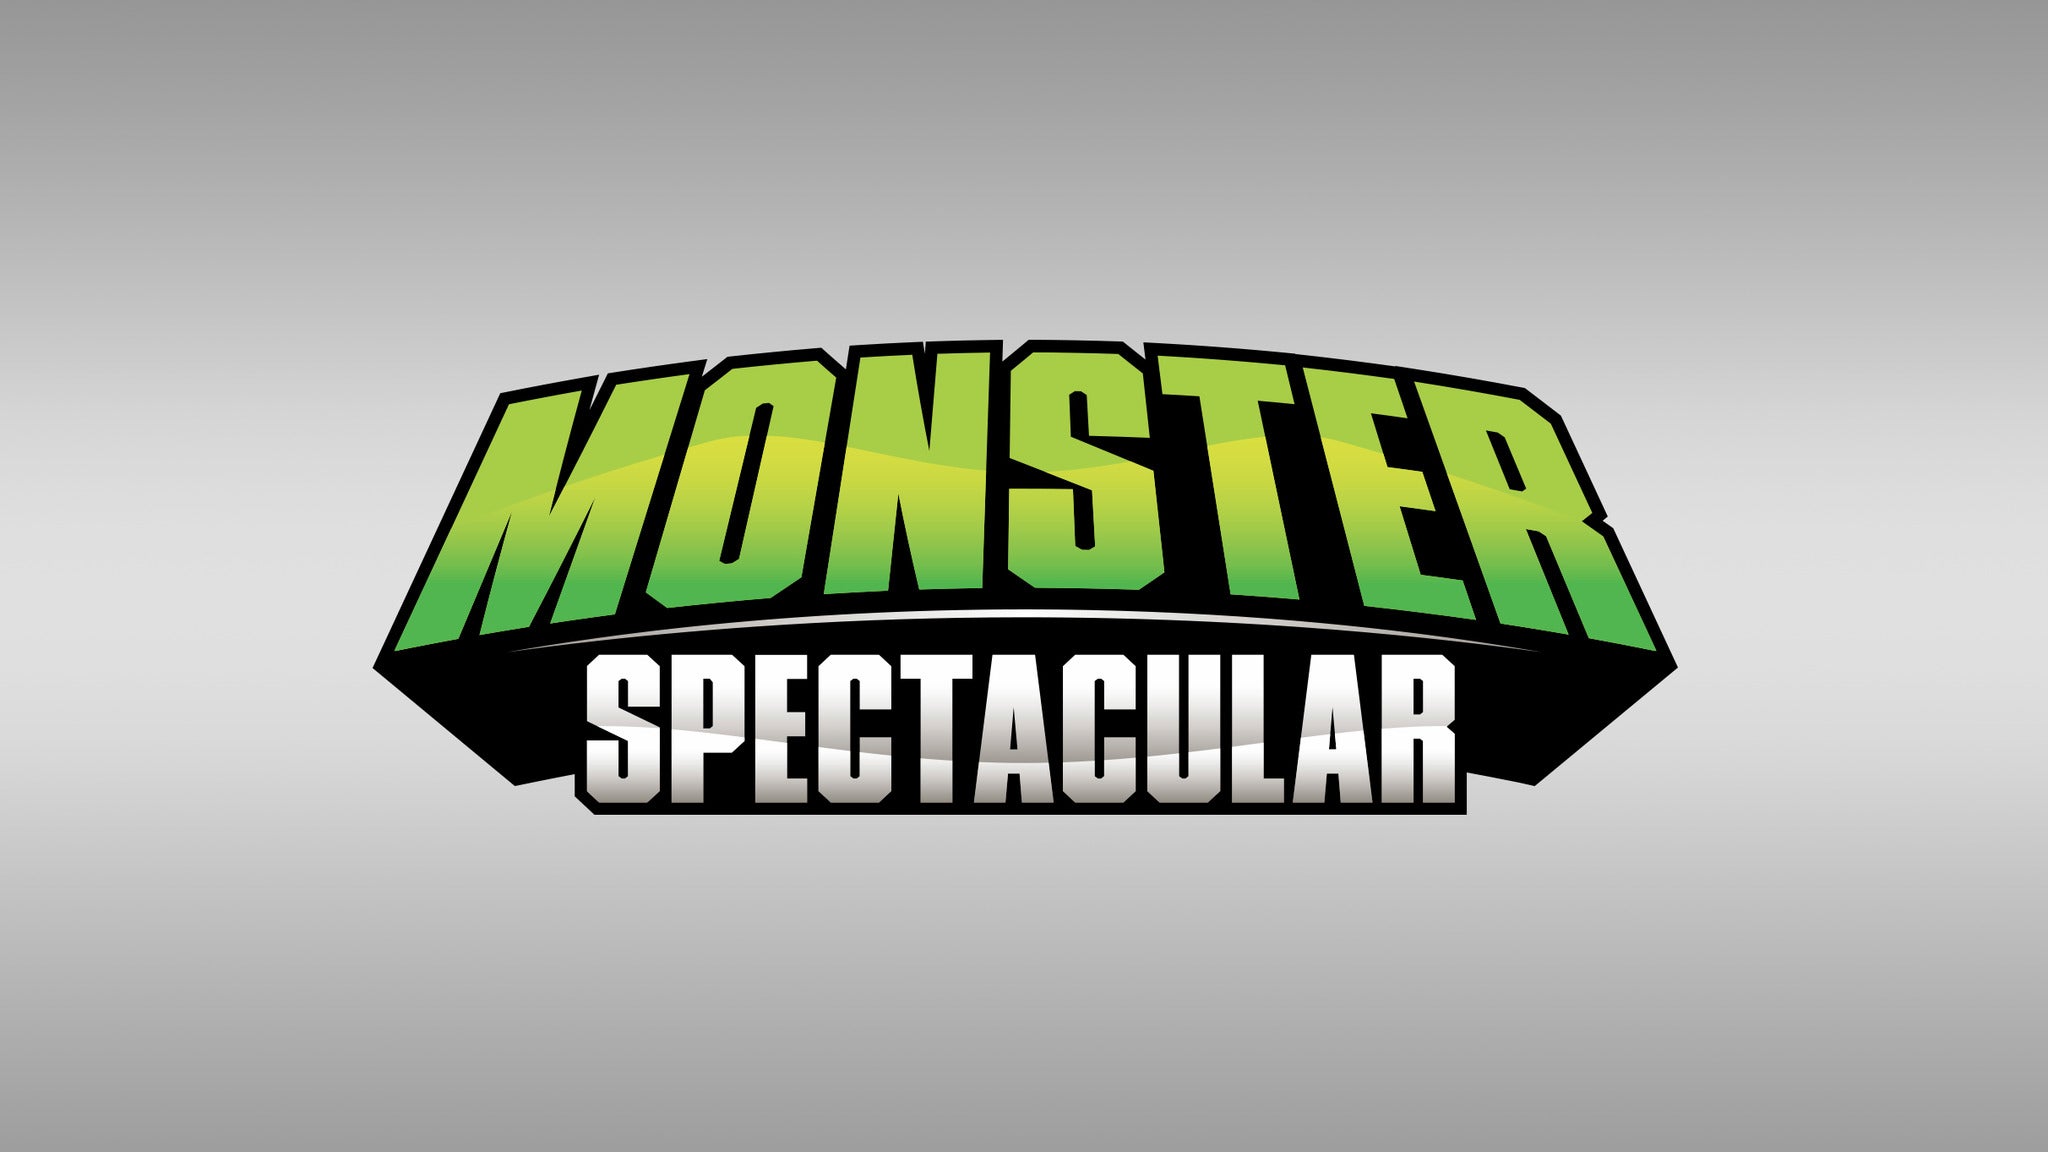 presale code for Monster Spectacular tickets in Kingston